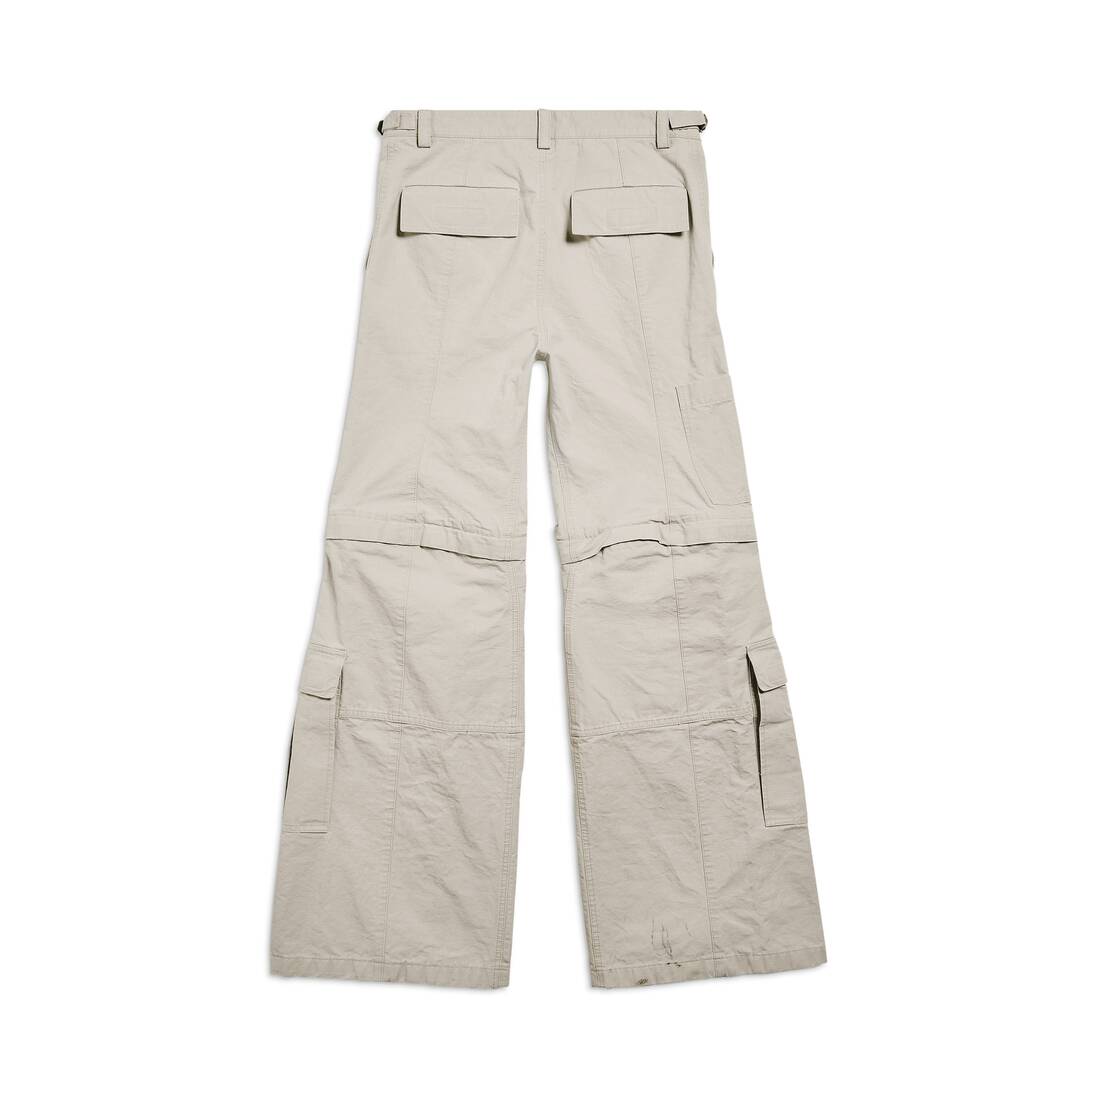 Hybrid flared cotton cargo pants in beige - Balenciaga